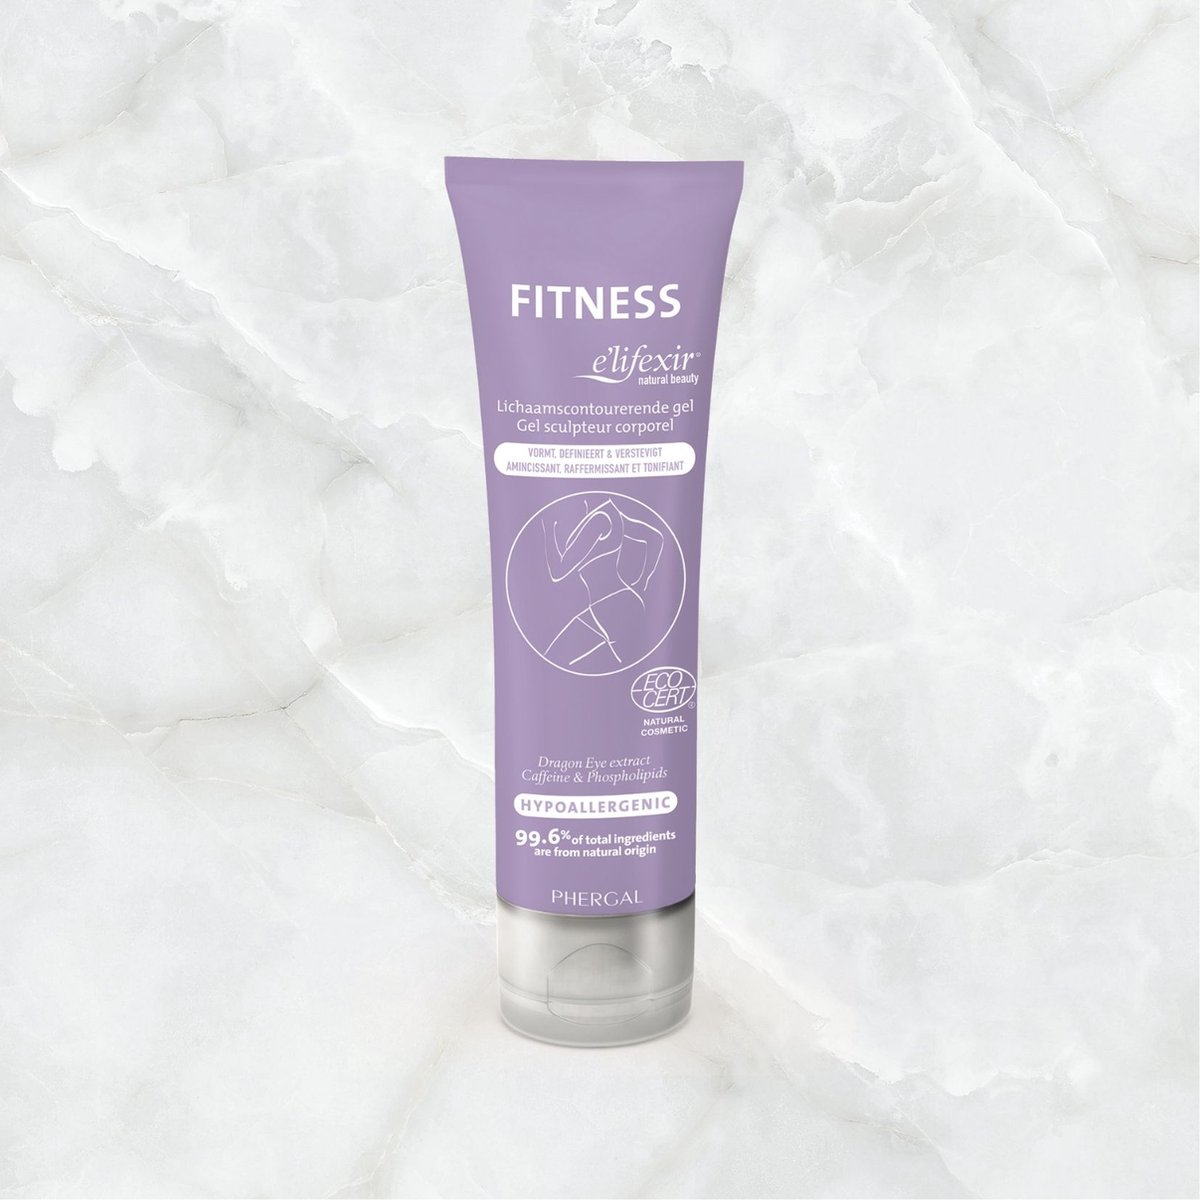 Fitness - e'lifexir Natural Beauty - 150ml - Body Toning Gel - Vegan - Microplastic FREE